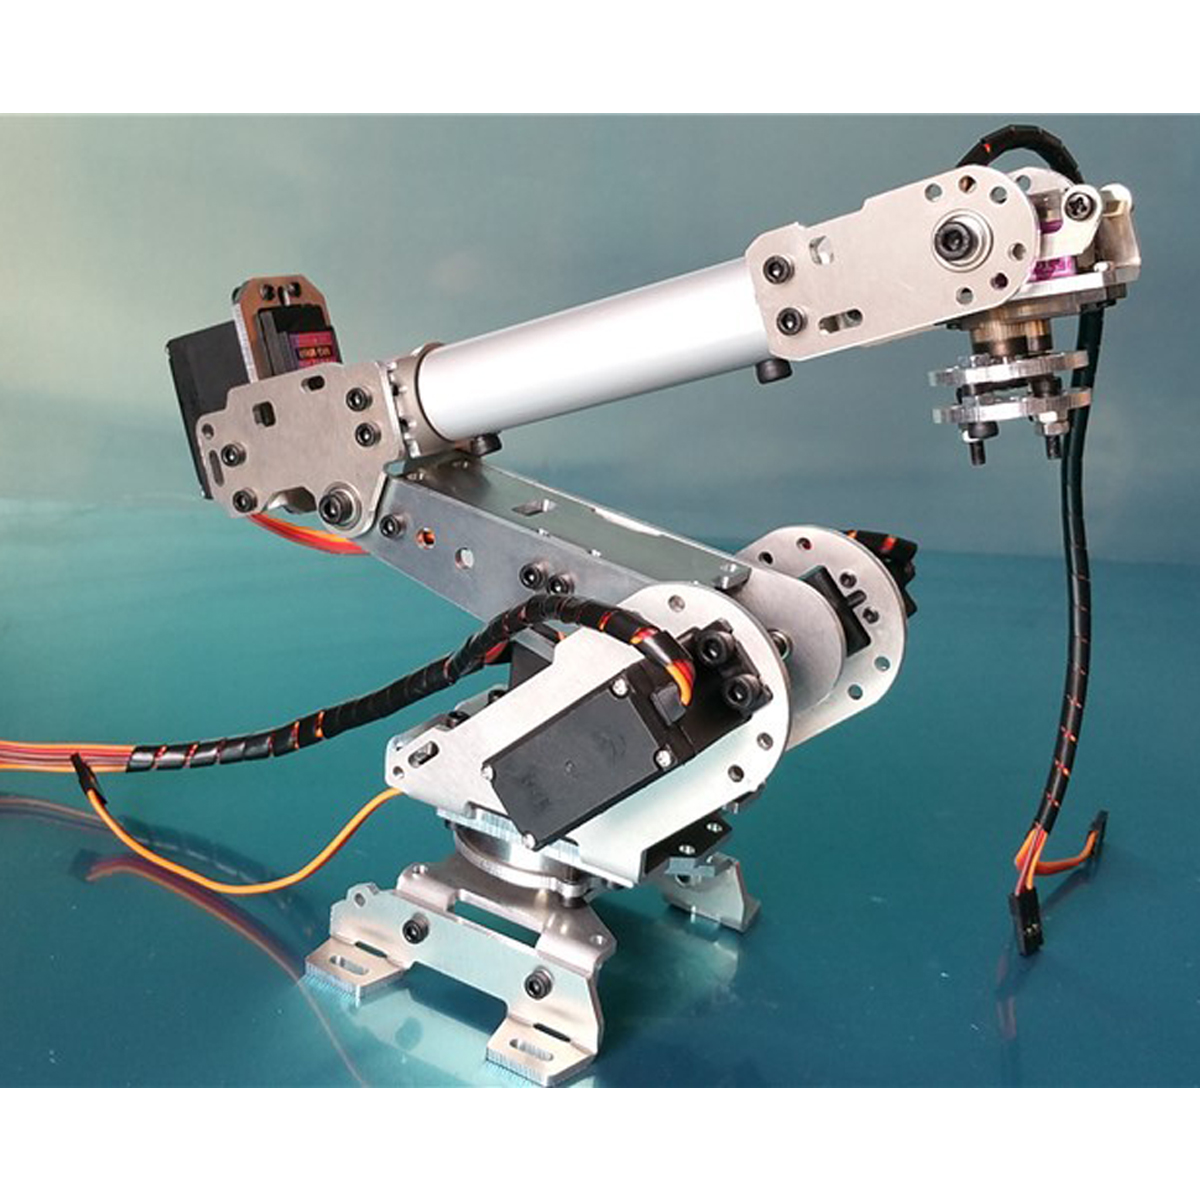 6DOF Mechanical Robot Arm Claw With Servos For Robotics Arduino DIY Kit 8